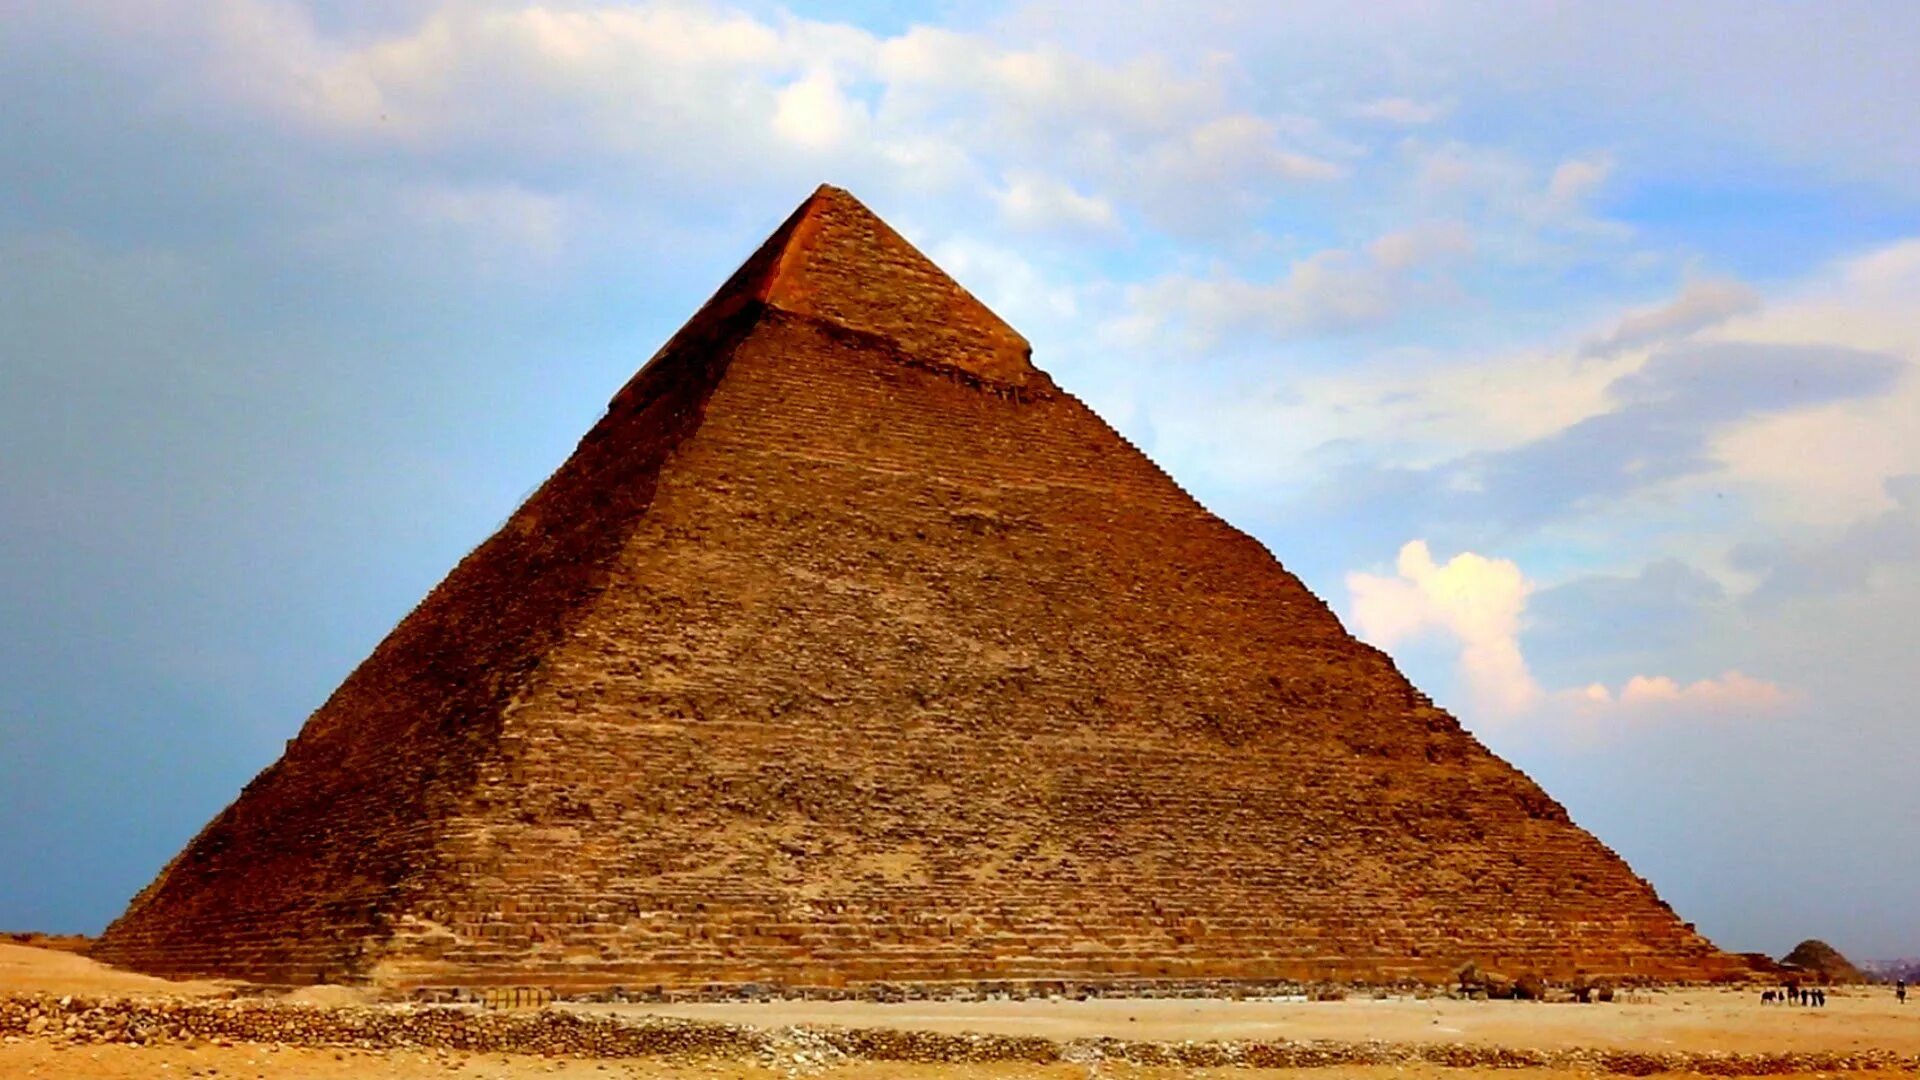 Misr piramidalari haqida. Пирамида Хеопса. Золотое сечение в пирамидах Египта. Пирамиды фараонов Хеопса Хефрена и Микерина. Ю шенсе пирамида.